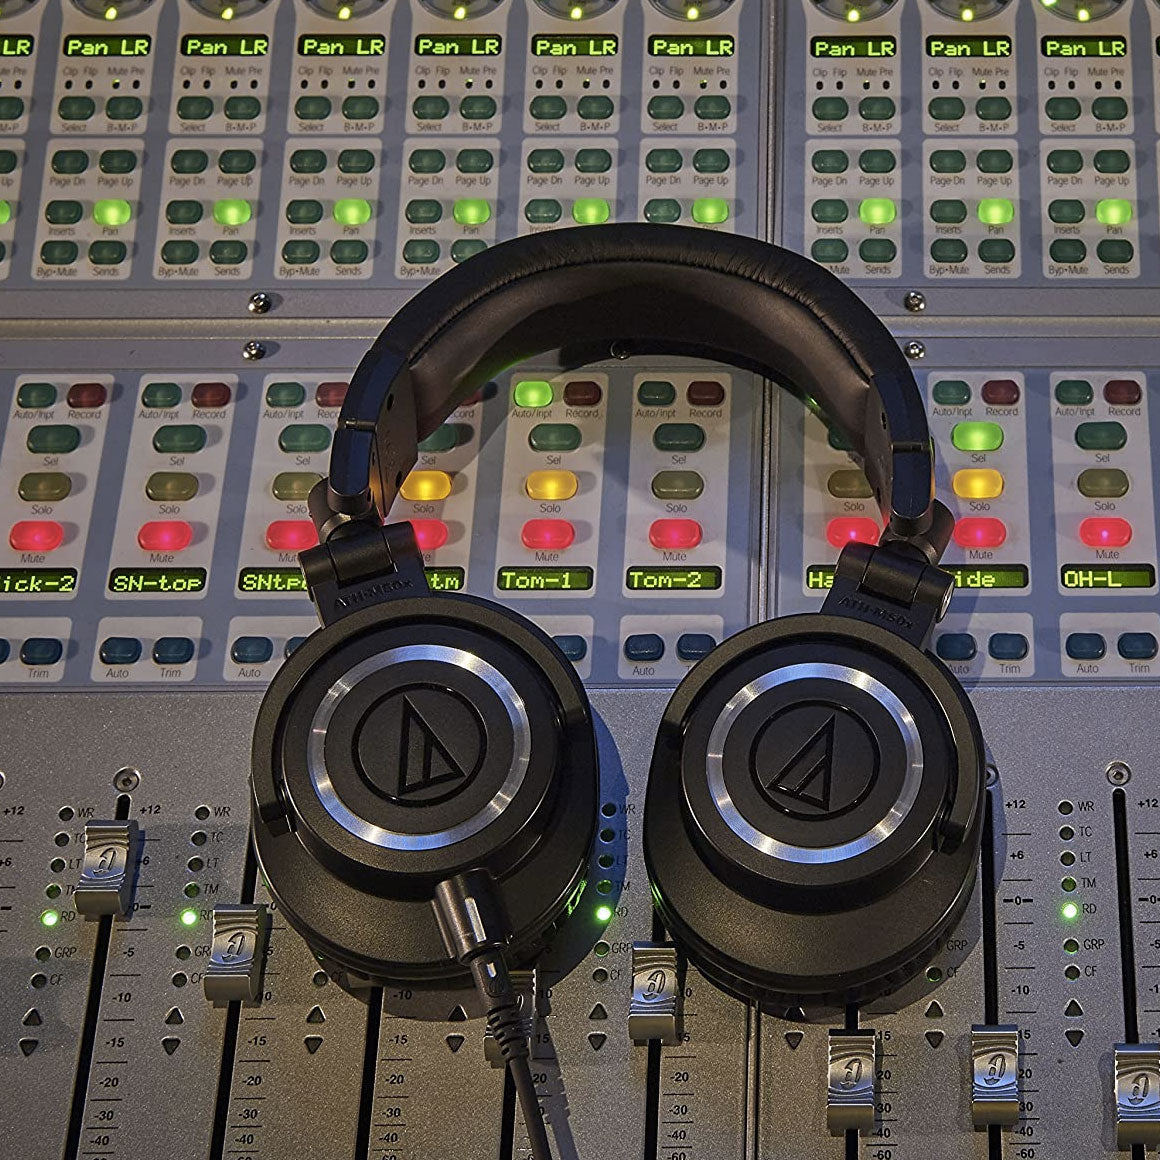 Buy Audio-Technica ATH-M50X Studio Headphones Online